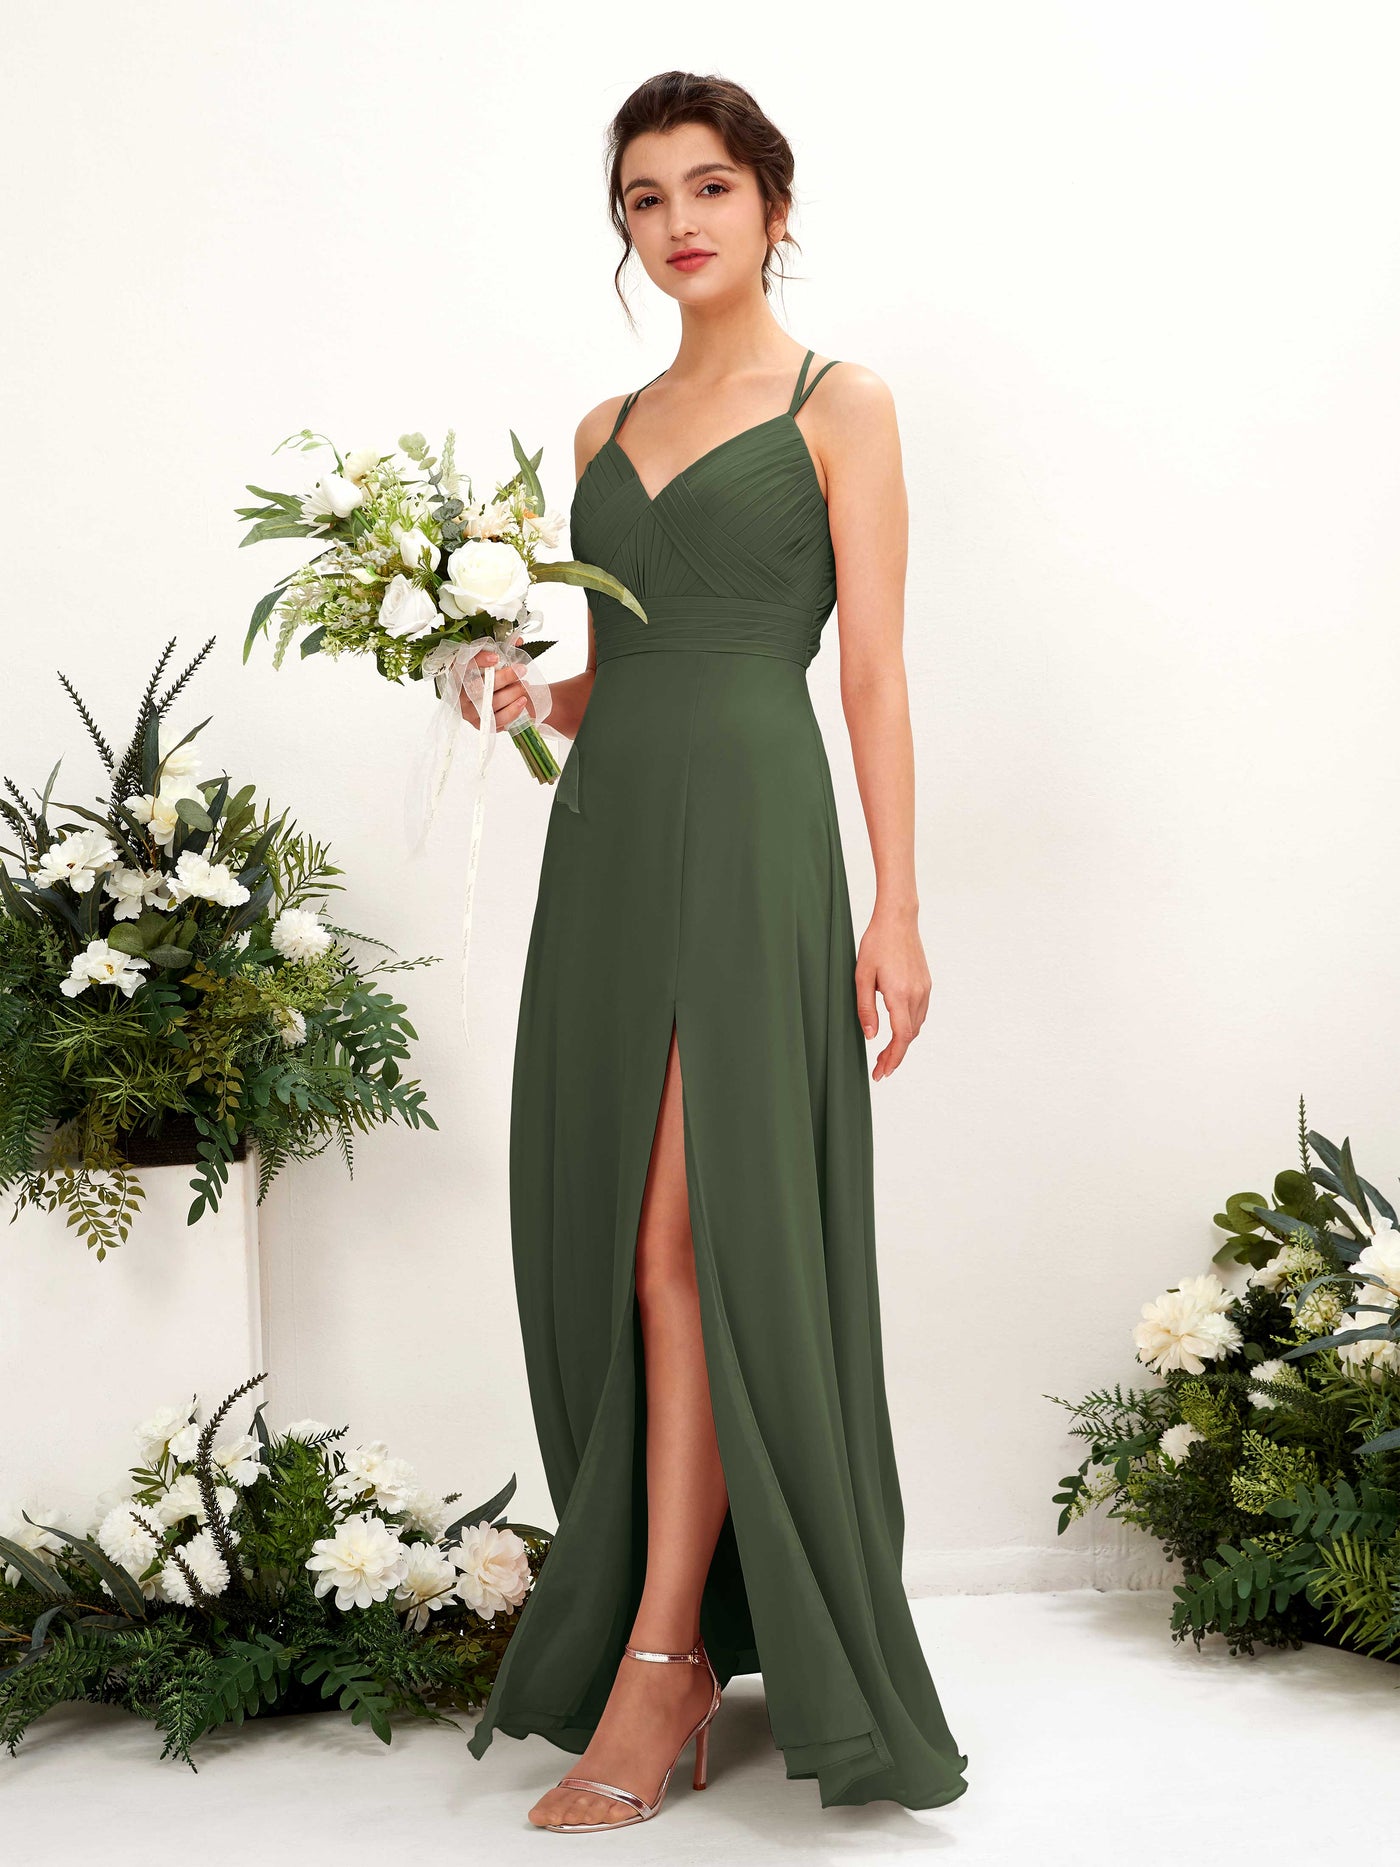 Martini Olive Bridesmaid Dresses Bridesmaid Dress A-line Chiffon Spaghetti-straps Full Length Sleeveless Wedding Party Dress (81225407)#color_martini-olive